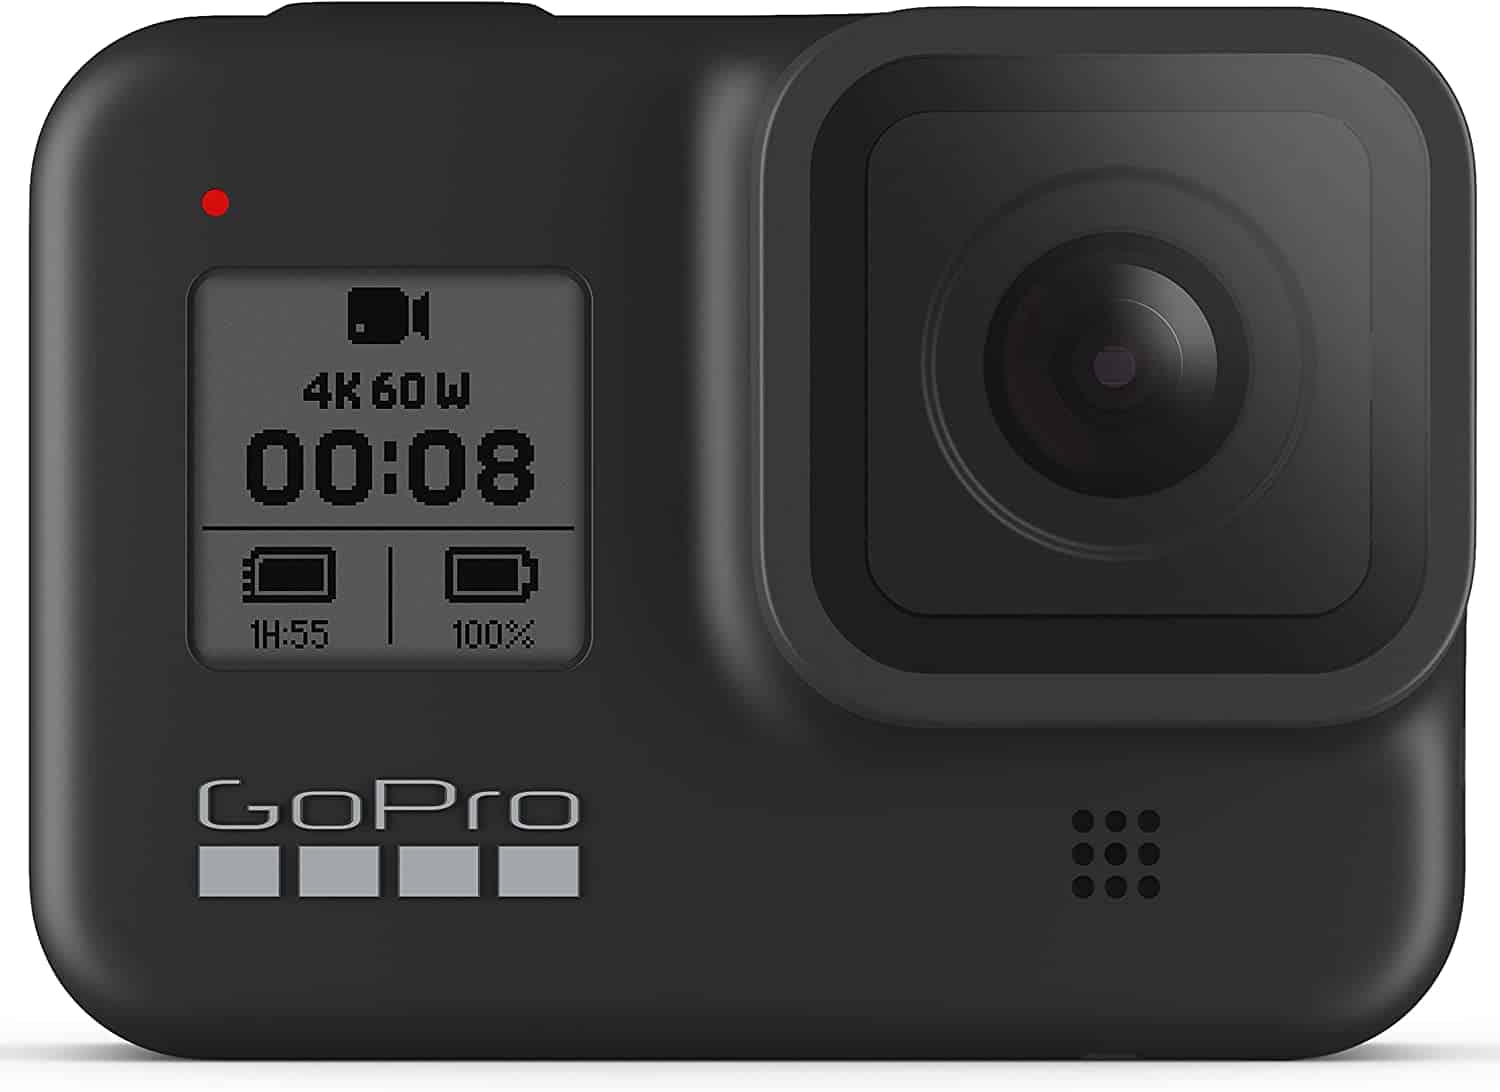 Best budget GoPro for stop motion: GoPro HERO8 Black